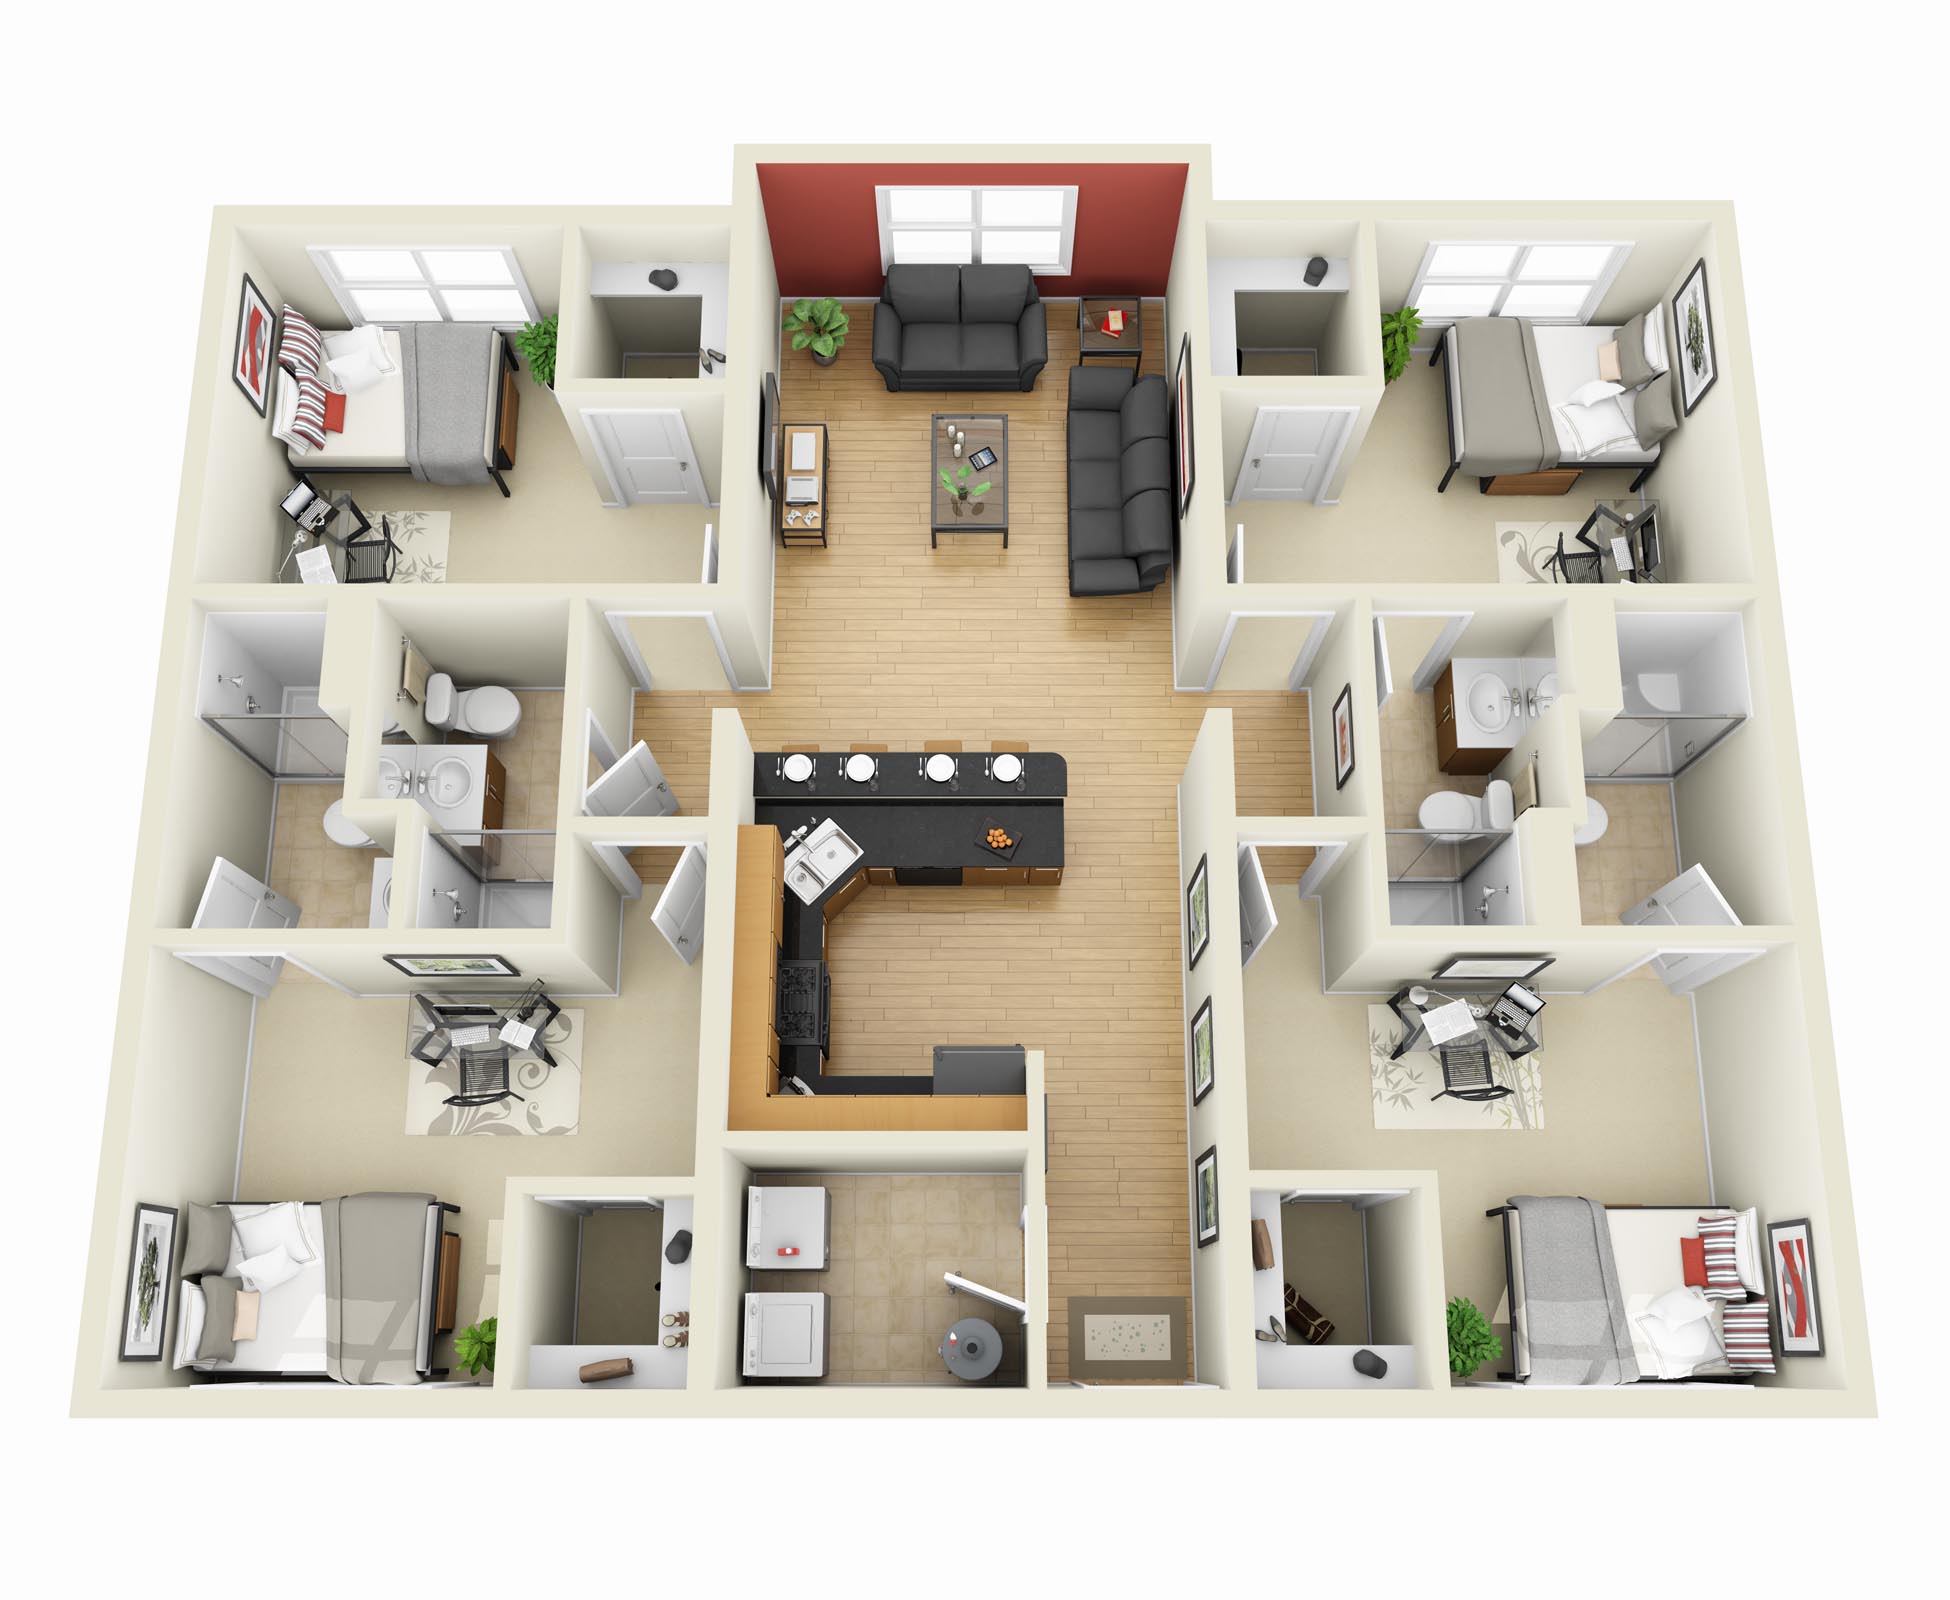 50 Four “4” Bedroom Apartment/House Plans Architecture